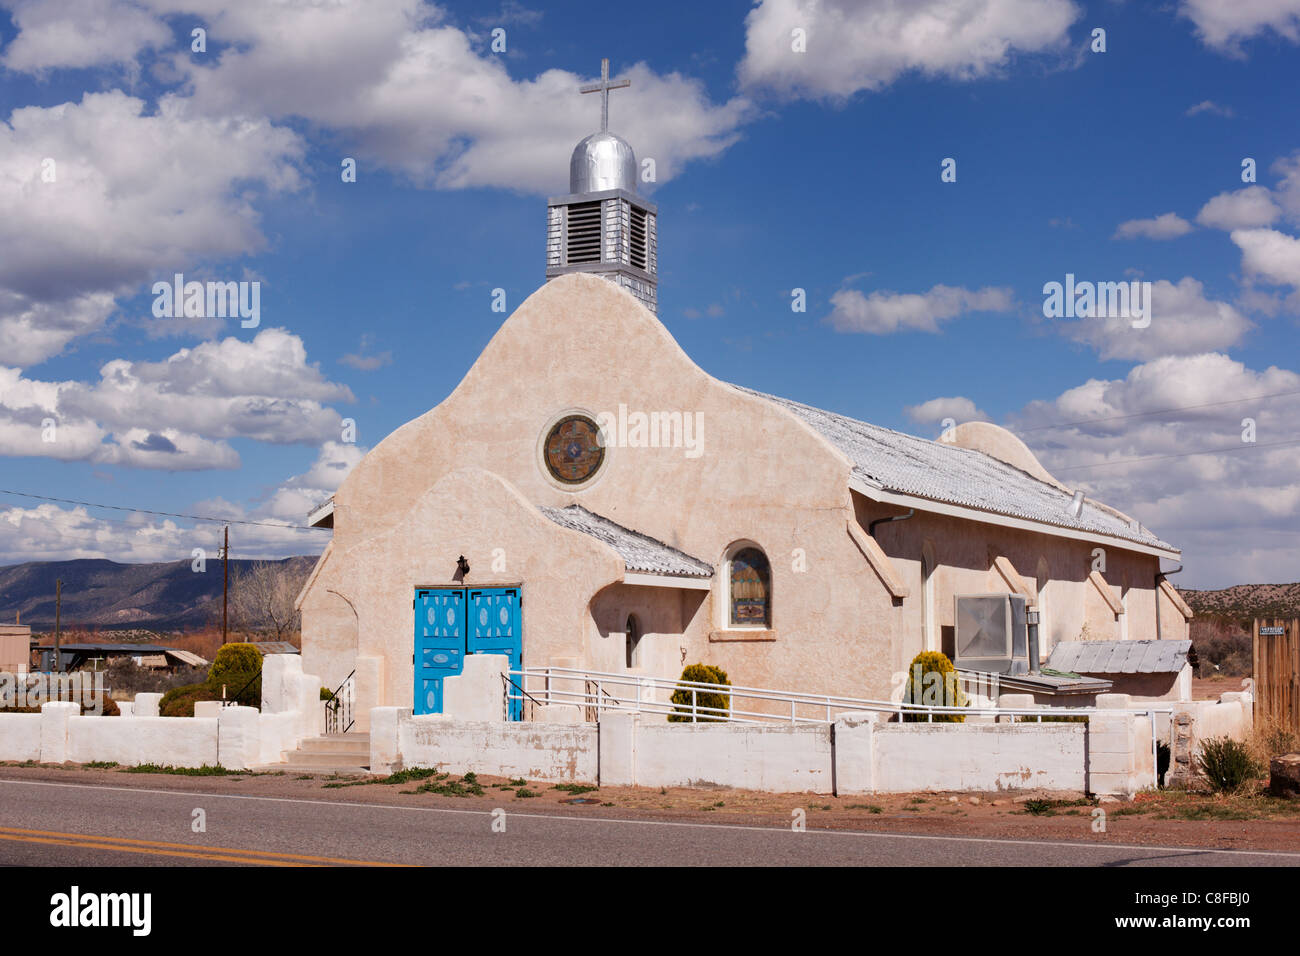 Catholic church in San Ysidro, New Mexico. Stock Photo